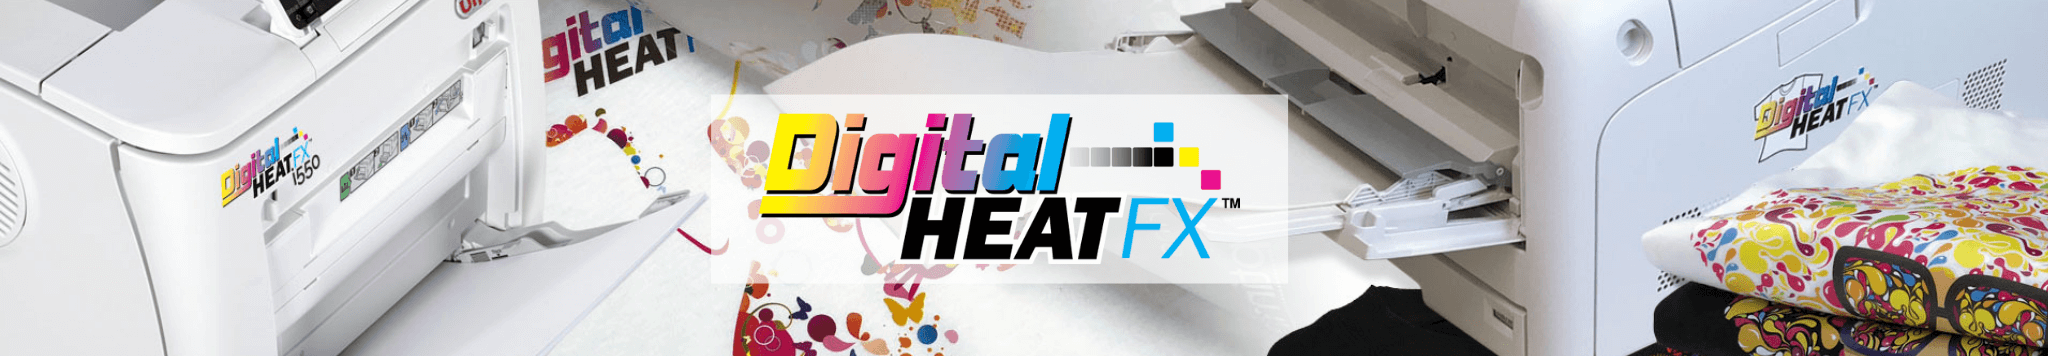 DigitalHeat FX  EZ Peel One-Step White Toner Transfer Paper on Vimeo